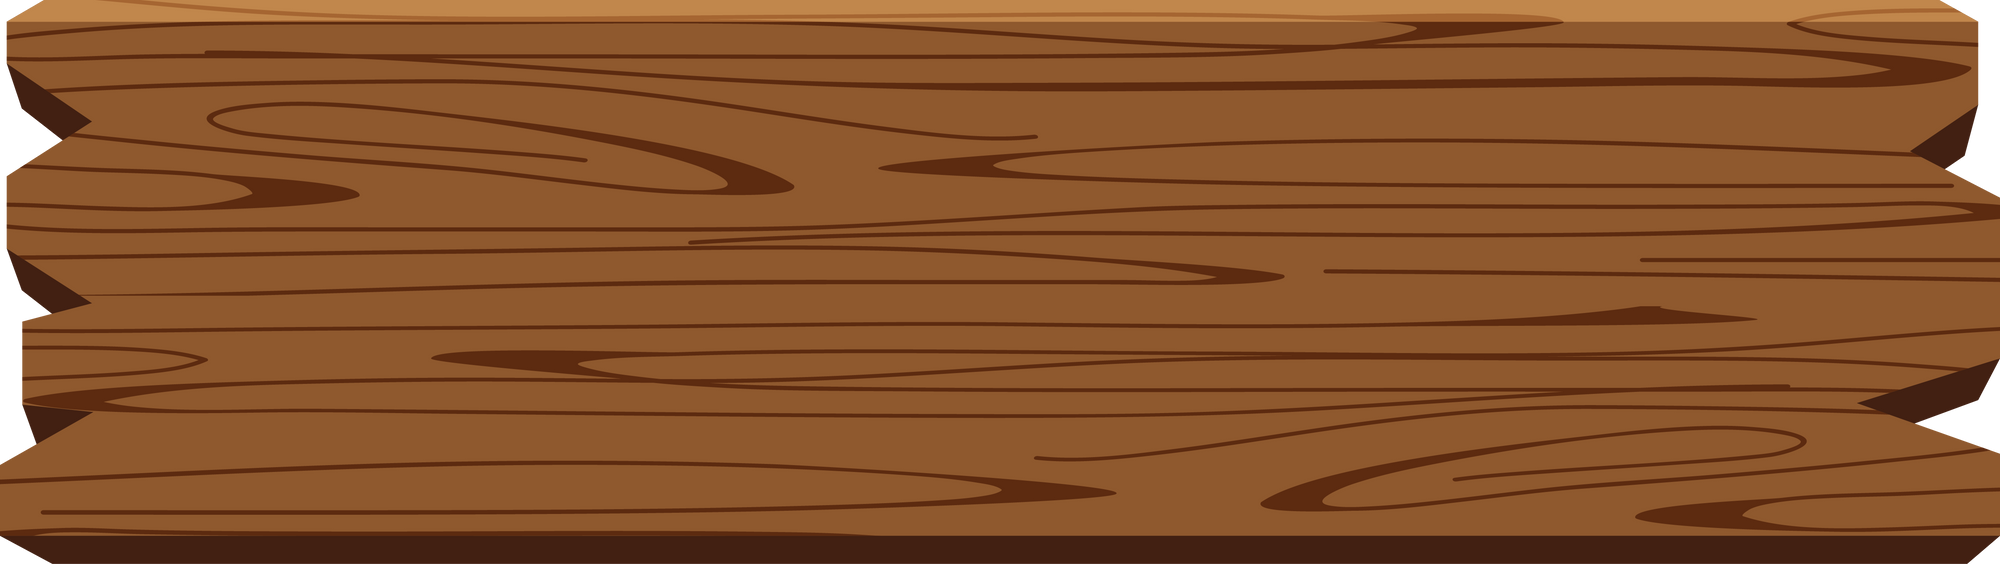 Wooden Plank Illustration